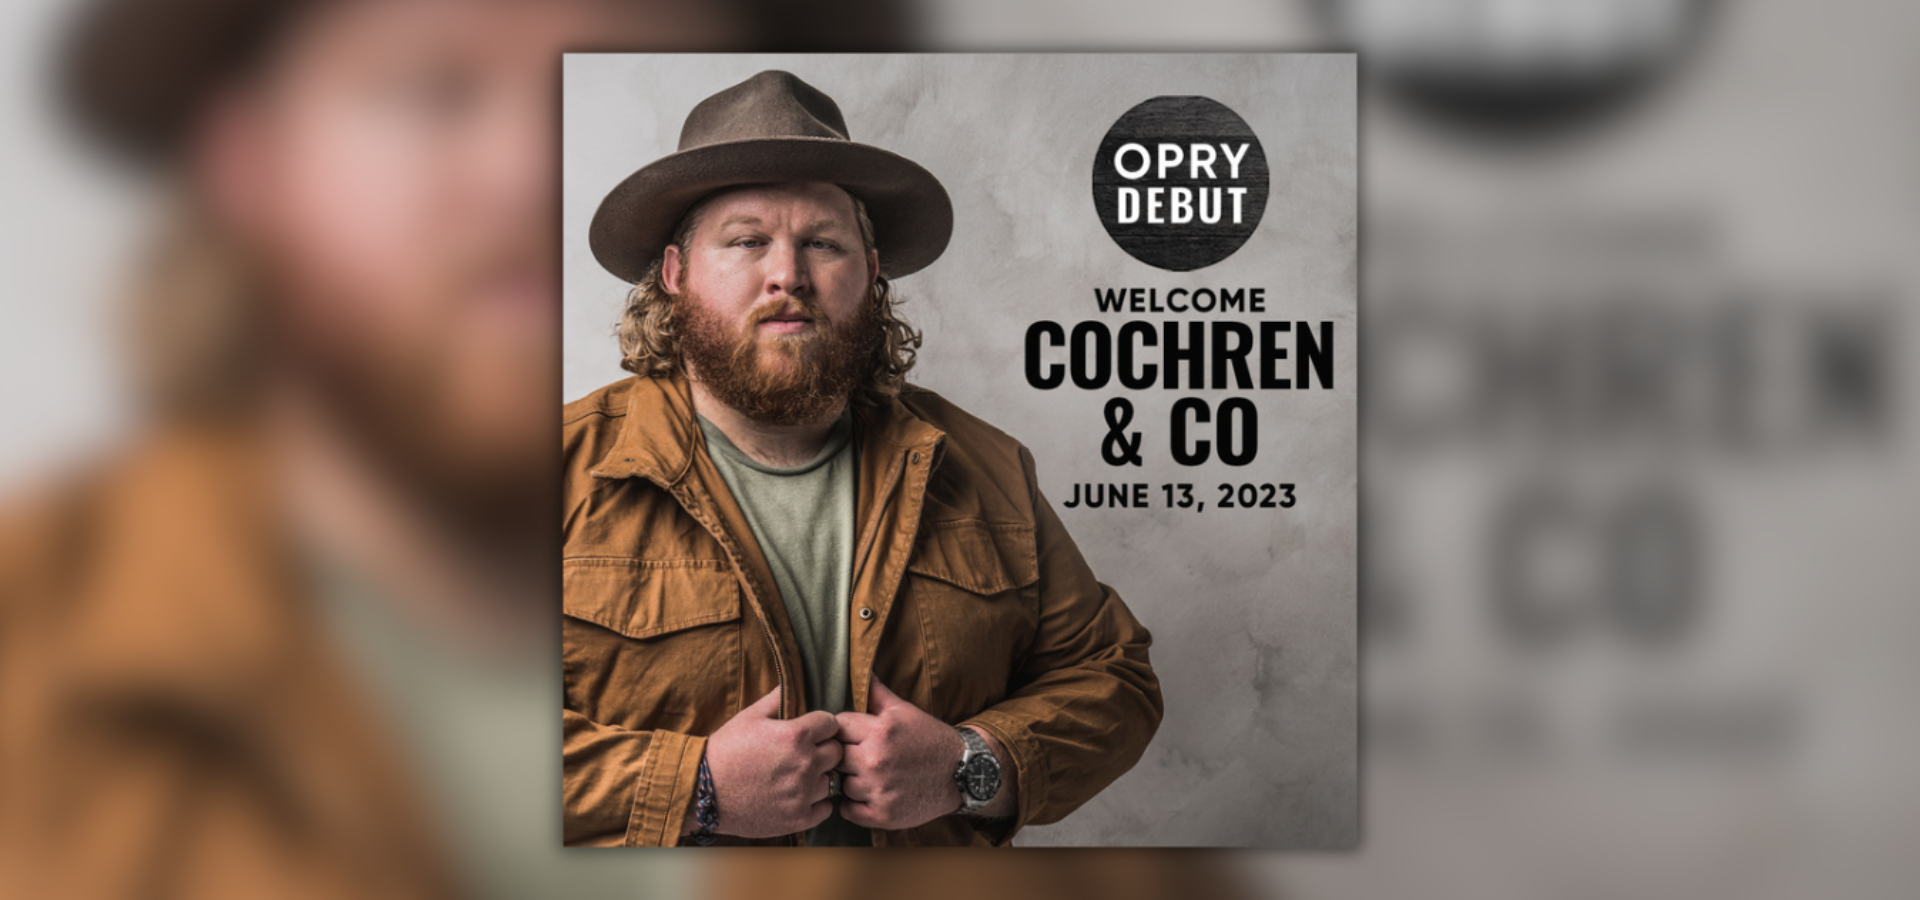 Cochren & Co. Making Opry Debut